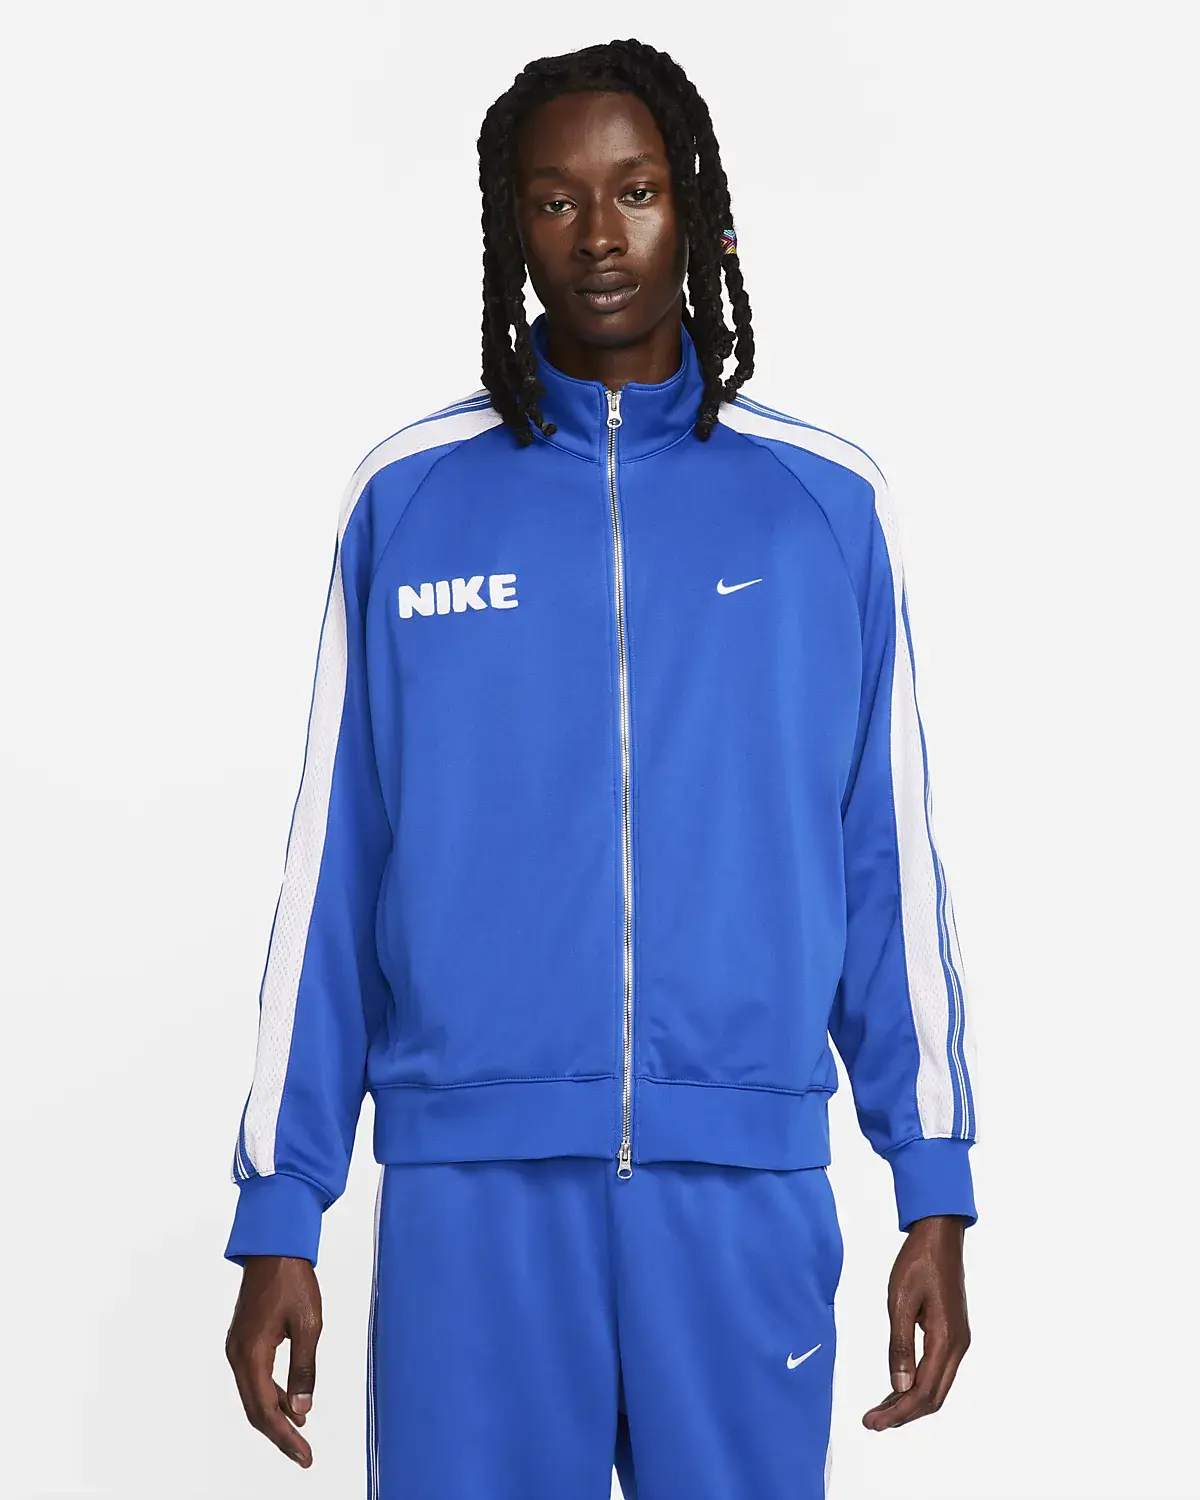 Nike Jackets. 1